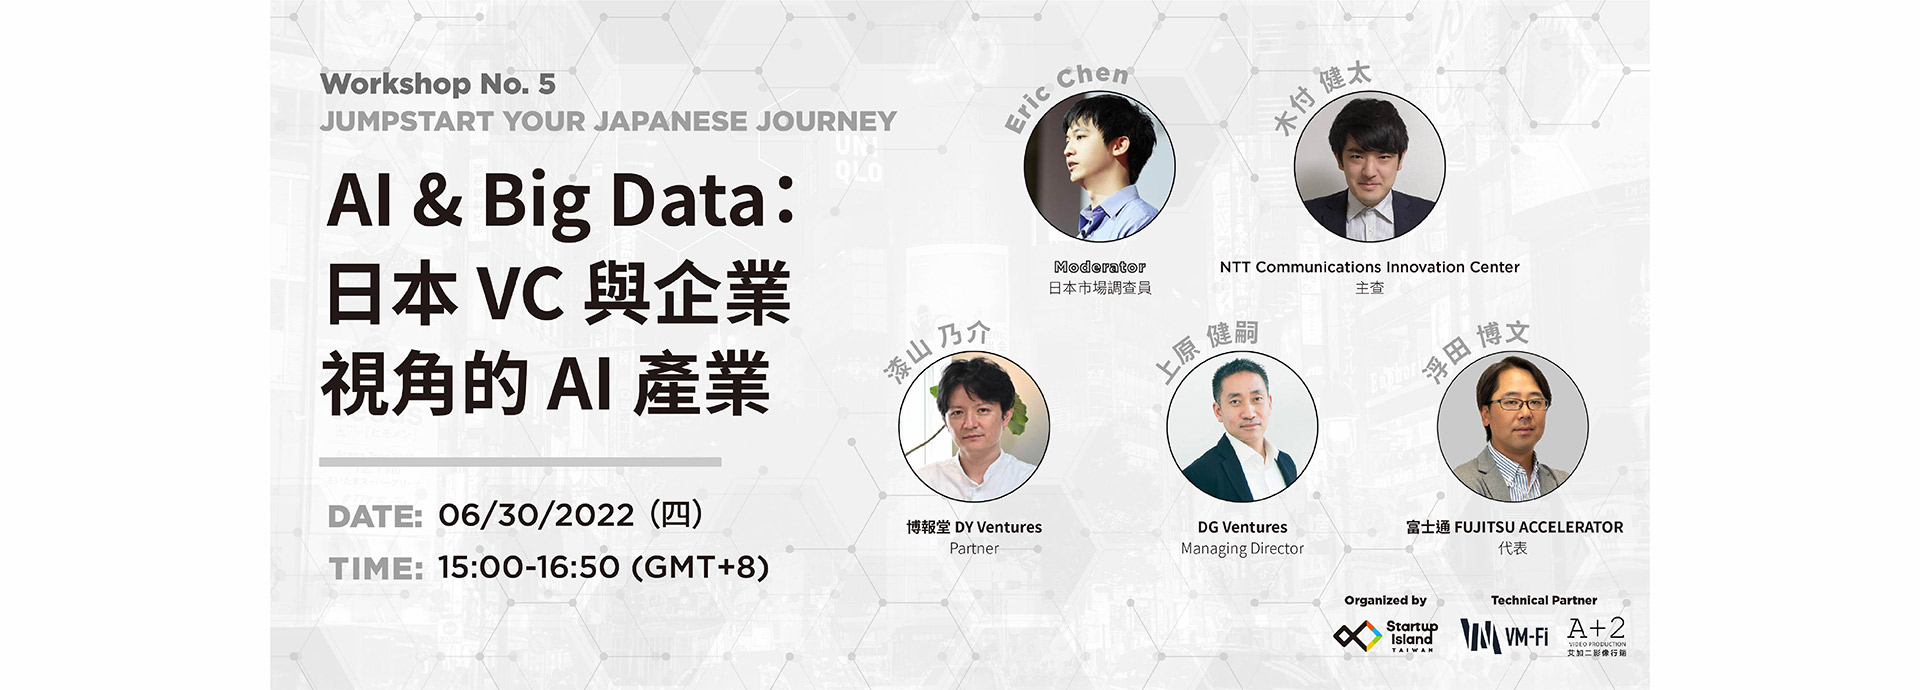 Jumpstart Your Japanese Journey Workshop No.5 - 日本 VC 與企業視角的 AI 產業線上工作坊